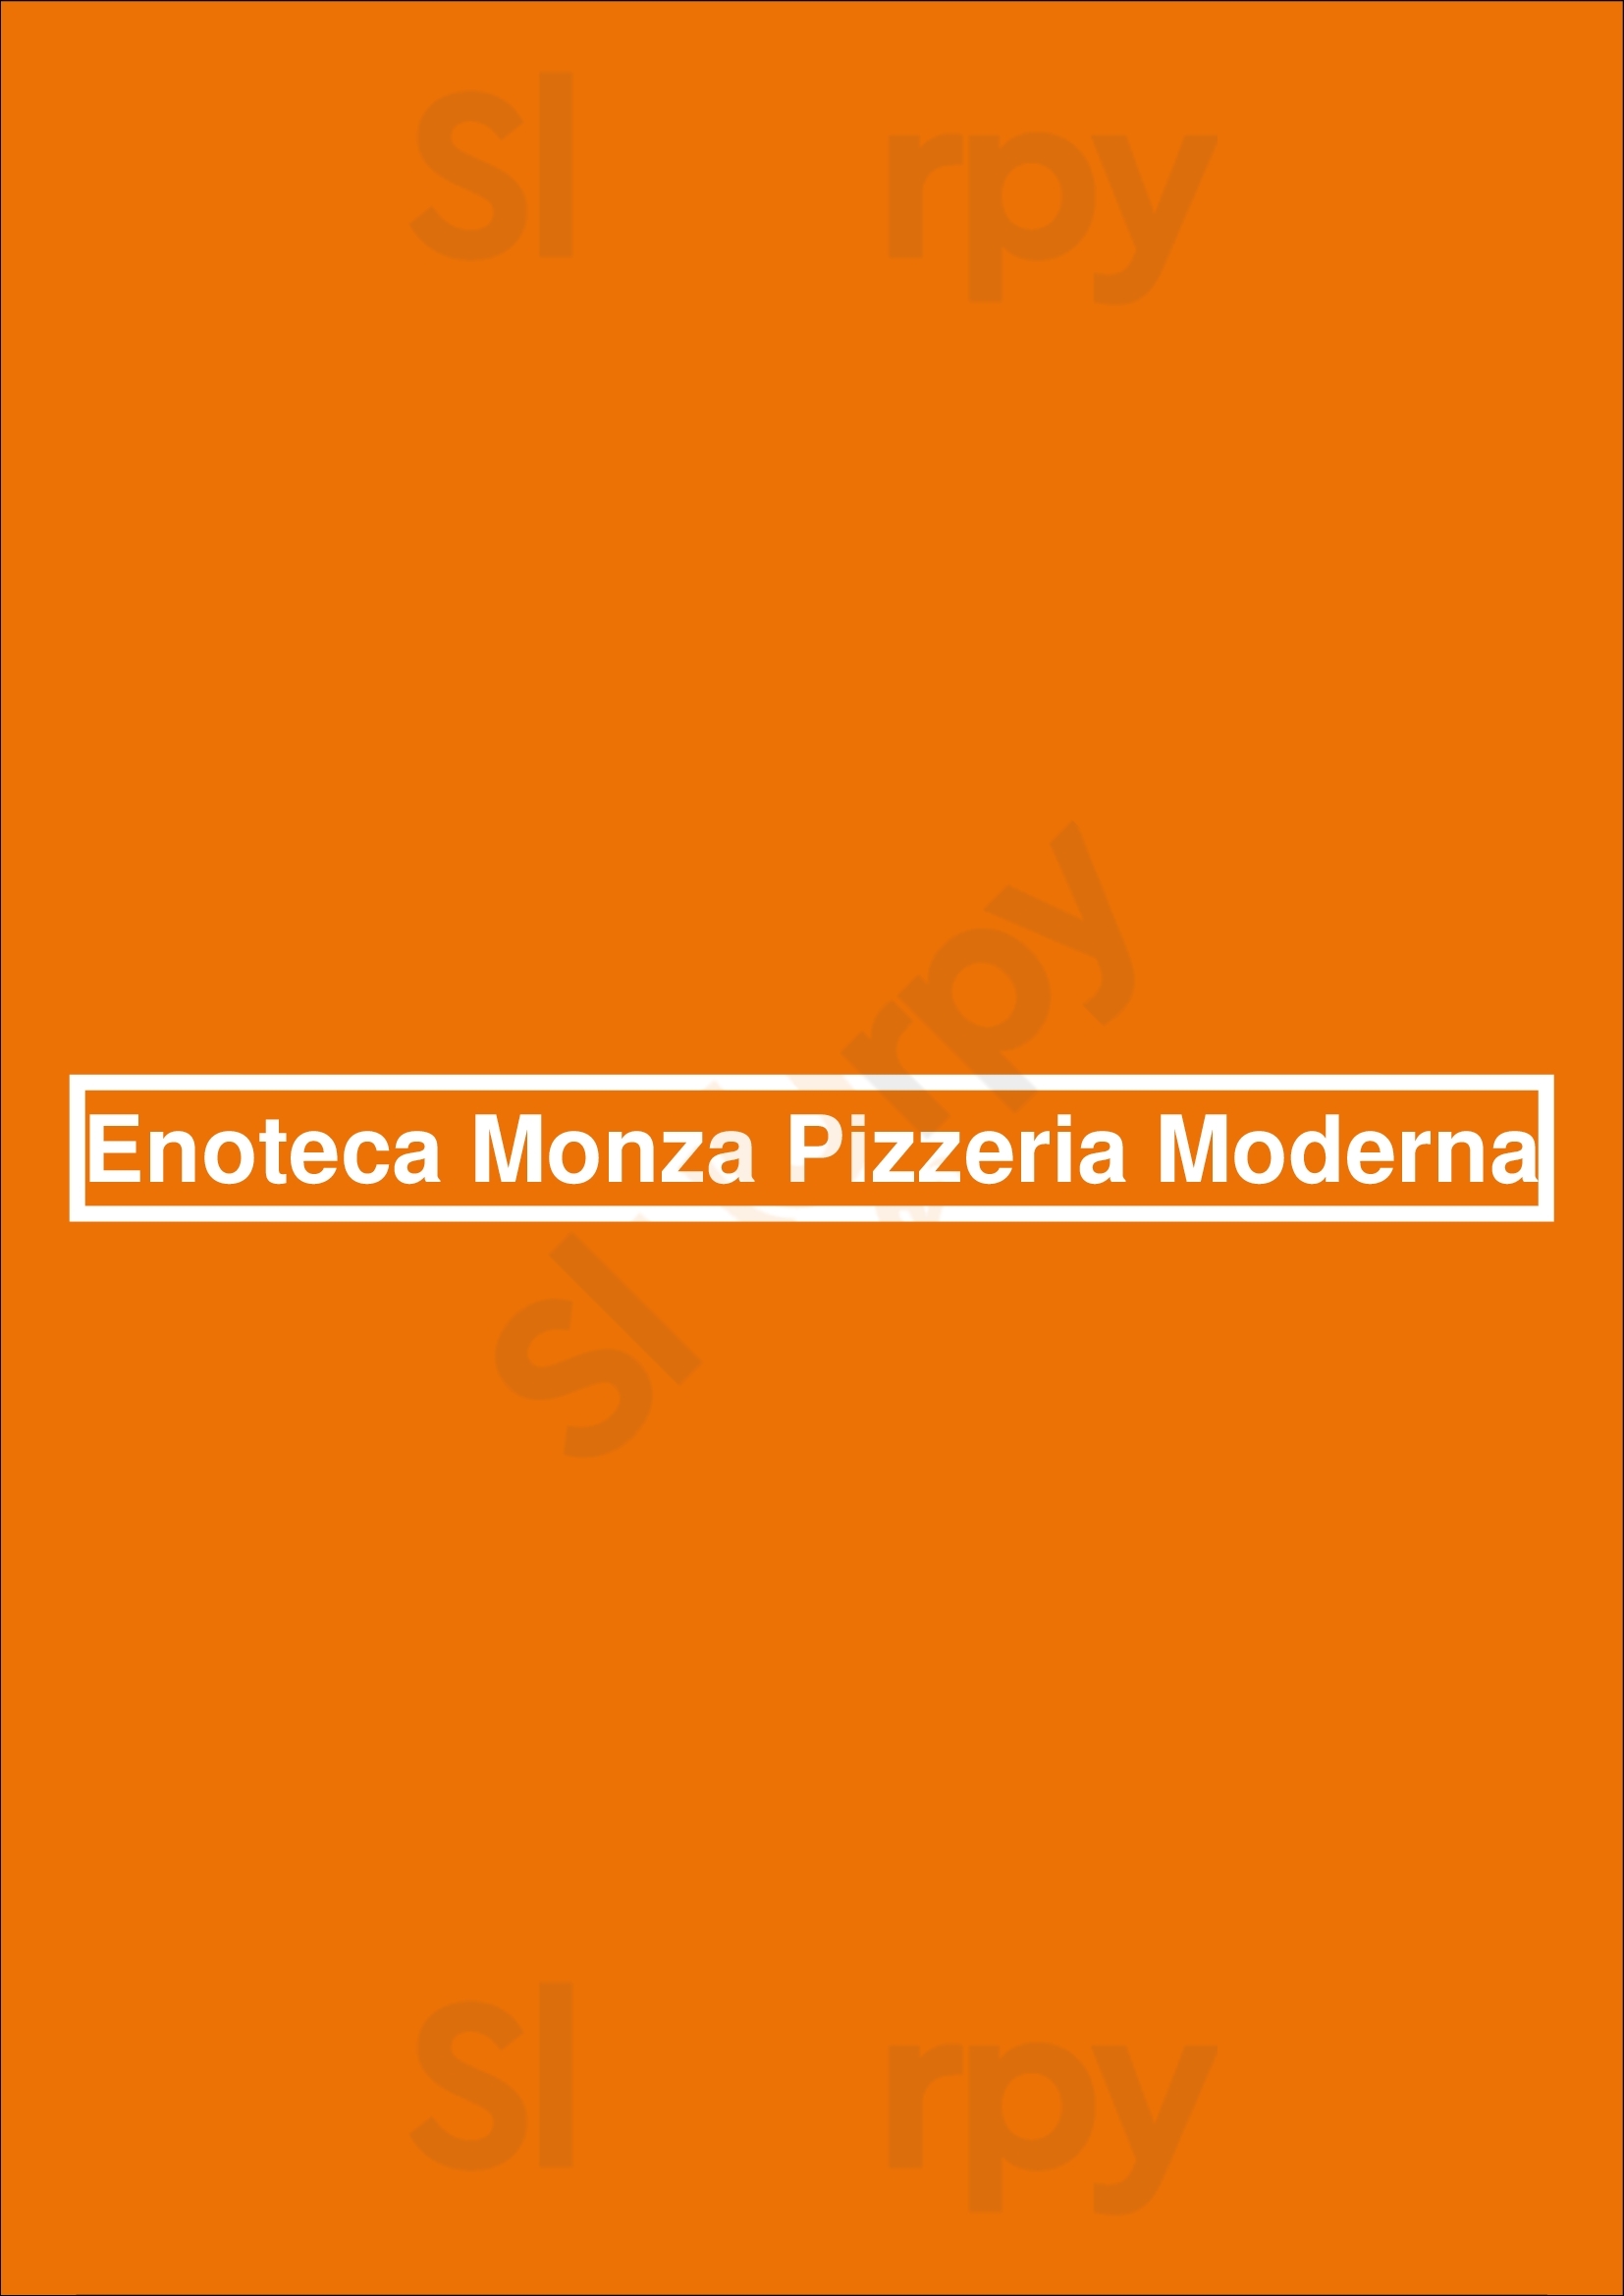 Enoteca Monza Pizzeria Moderna Montreal Menu - 1